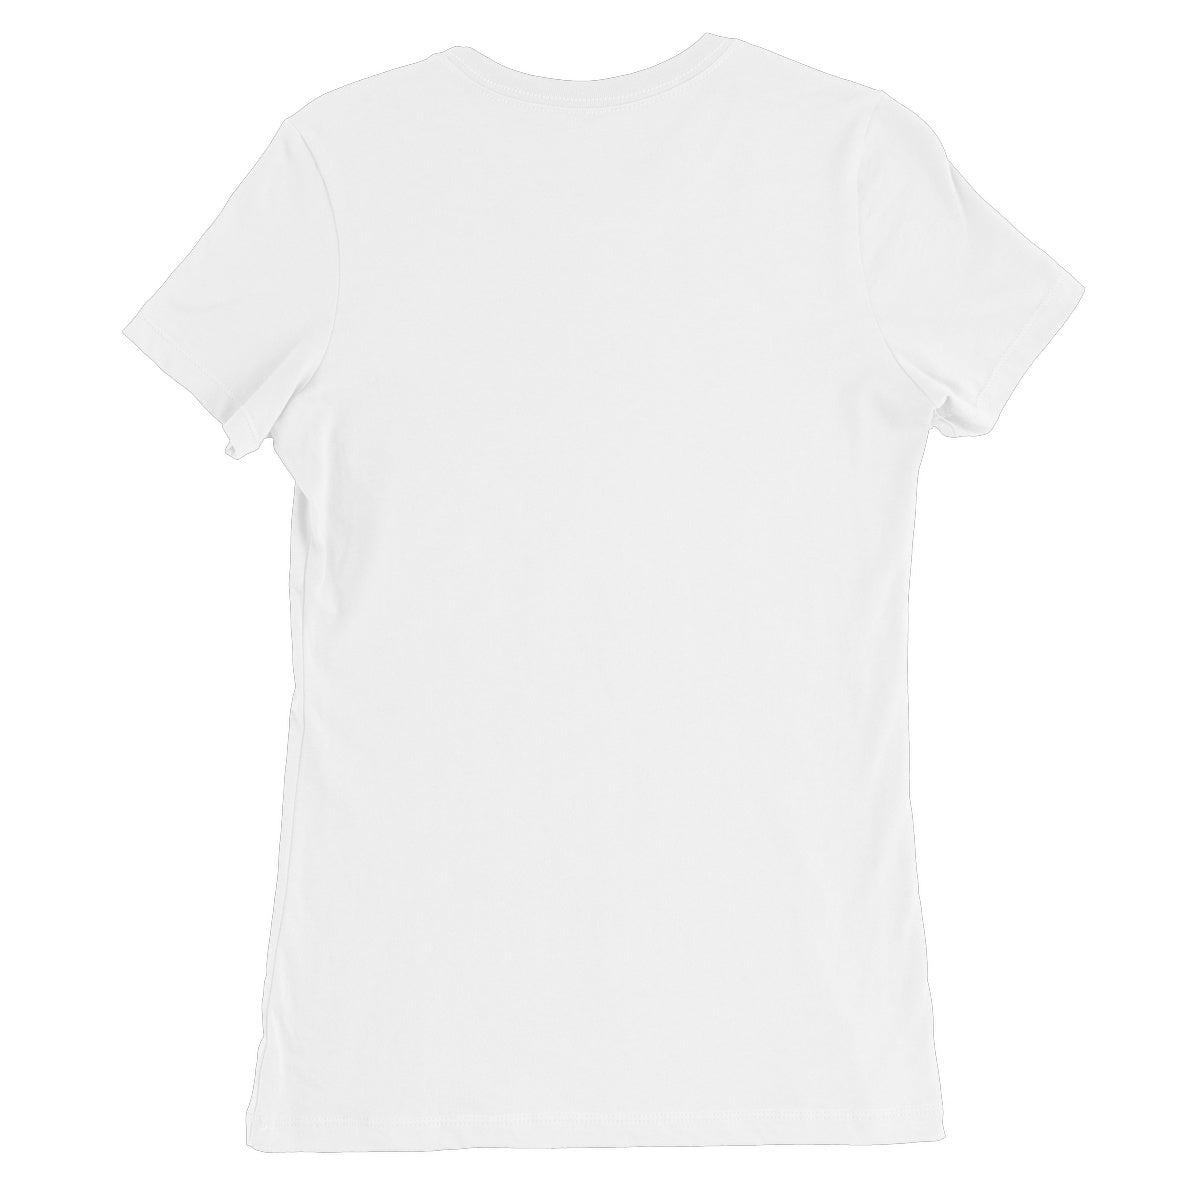 Lotus, Sunset Women's Favourite T-Shirt